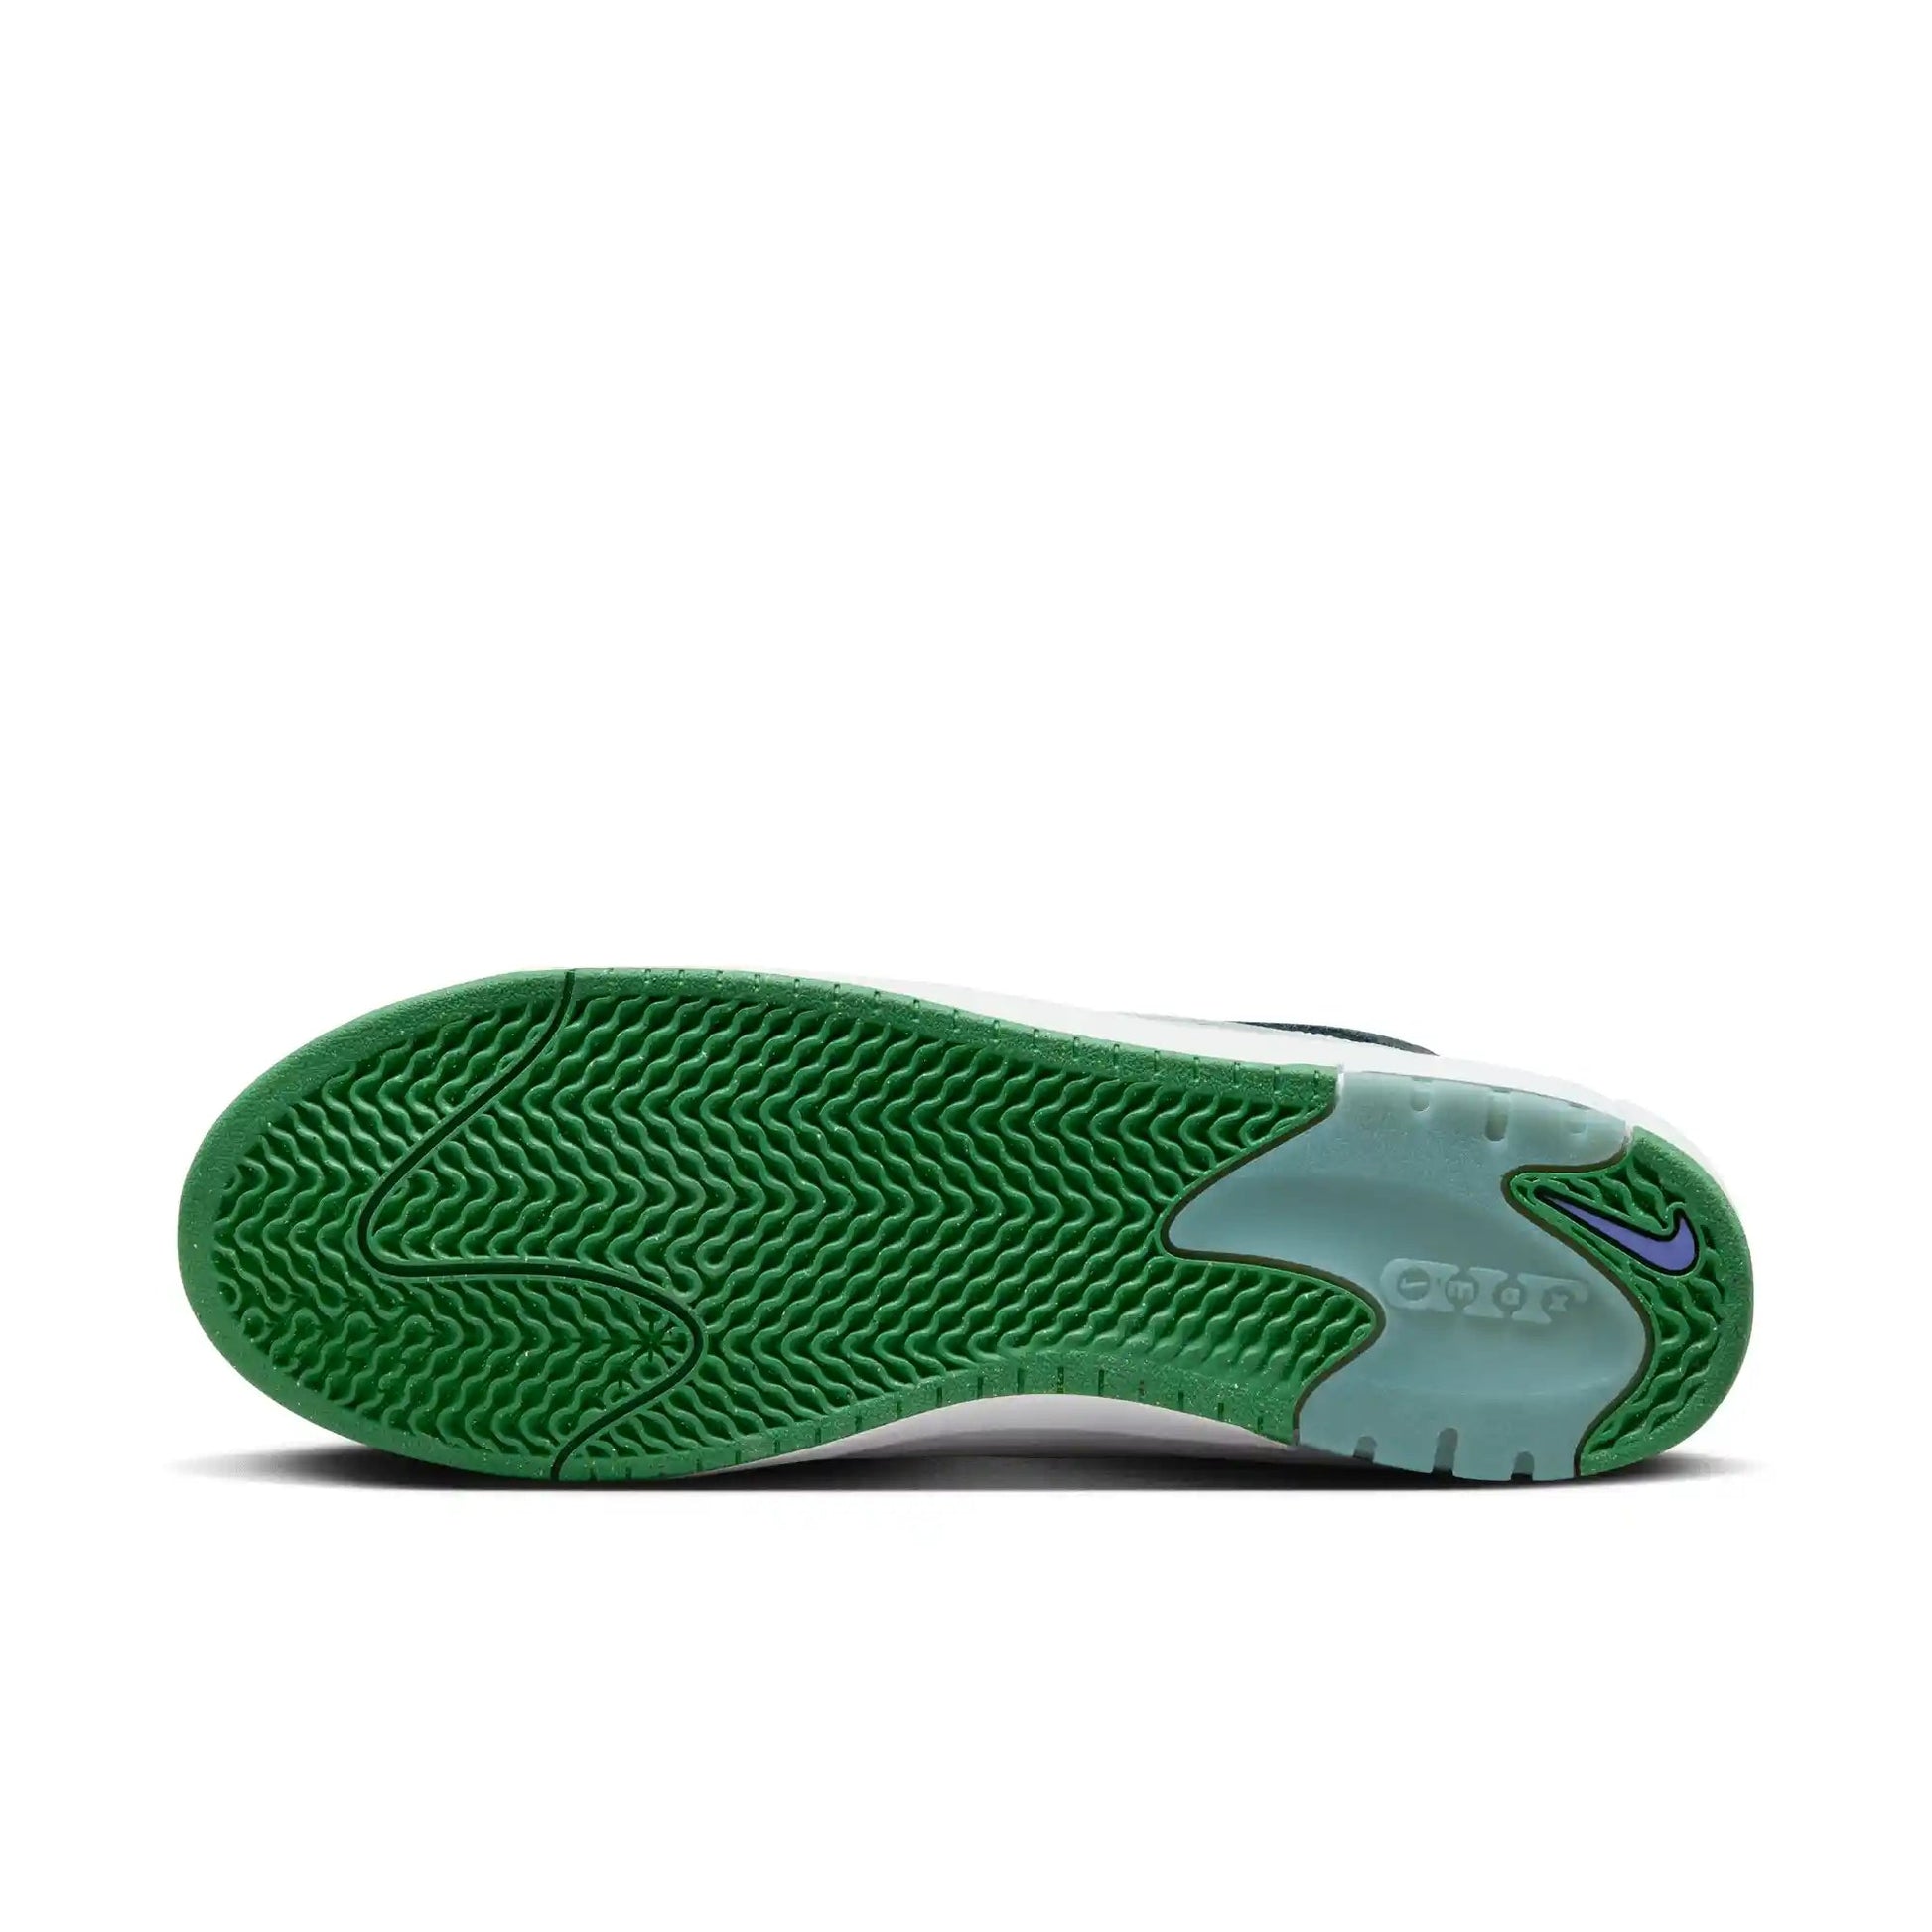 Nike SB Ishod 2, white/persian violet-obsidian-pine green - Tiki Room Skateboards - 7